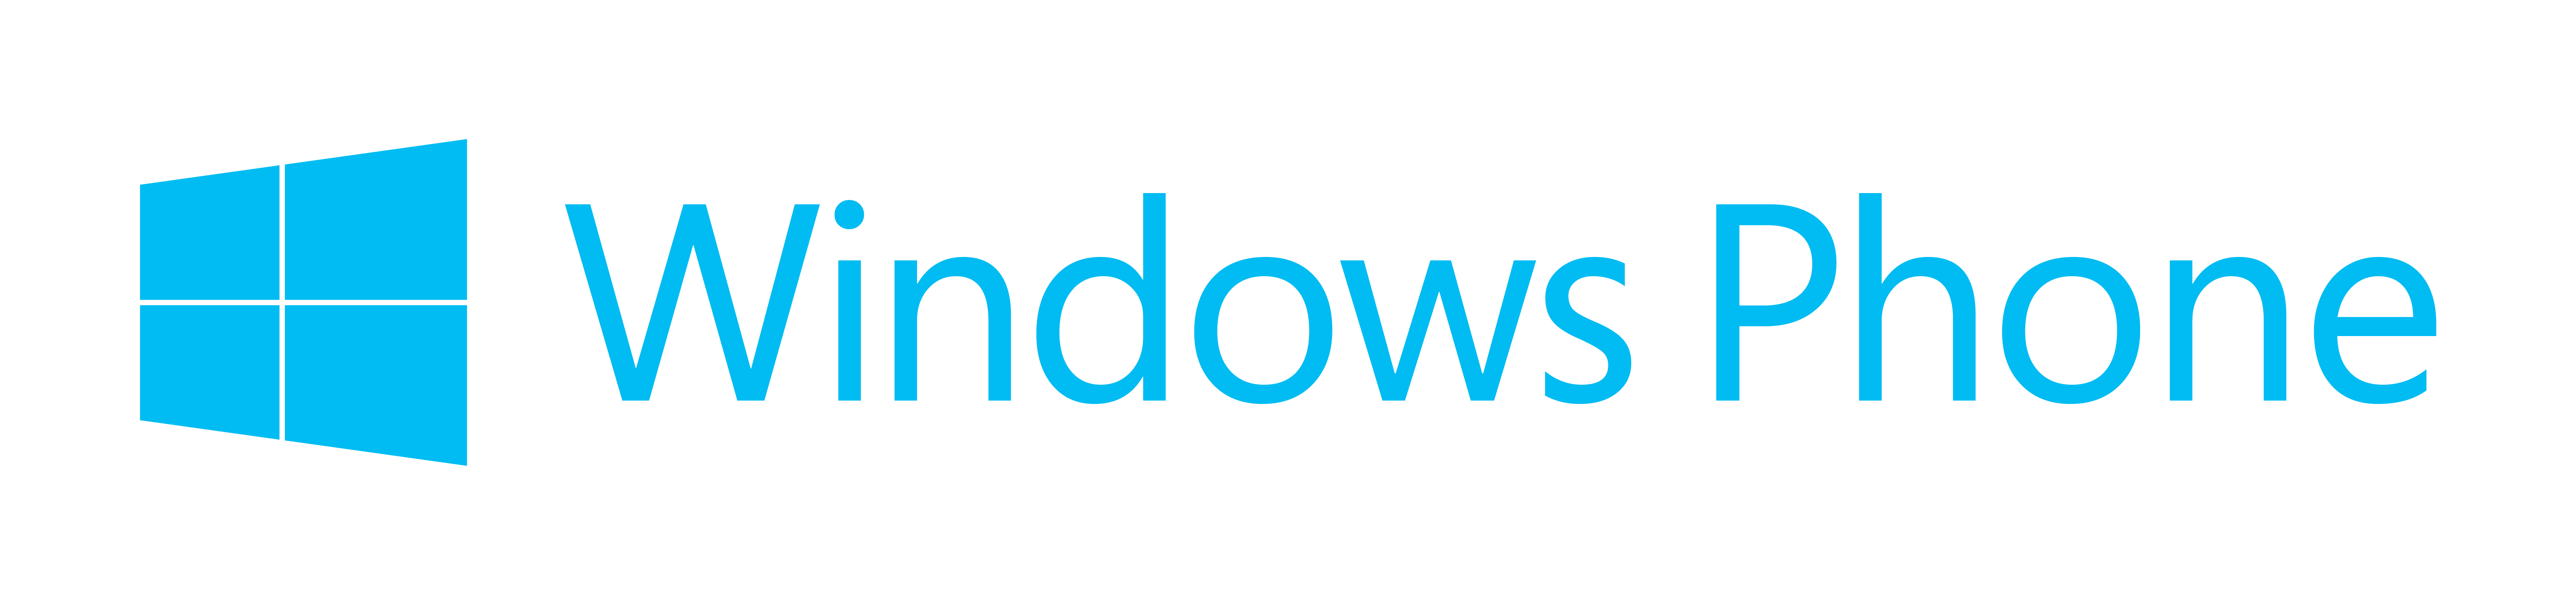 Windows App Logo - Windows Phone App Logo Png Images